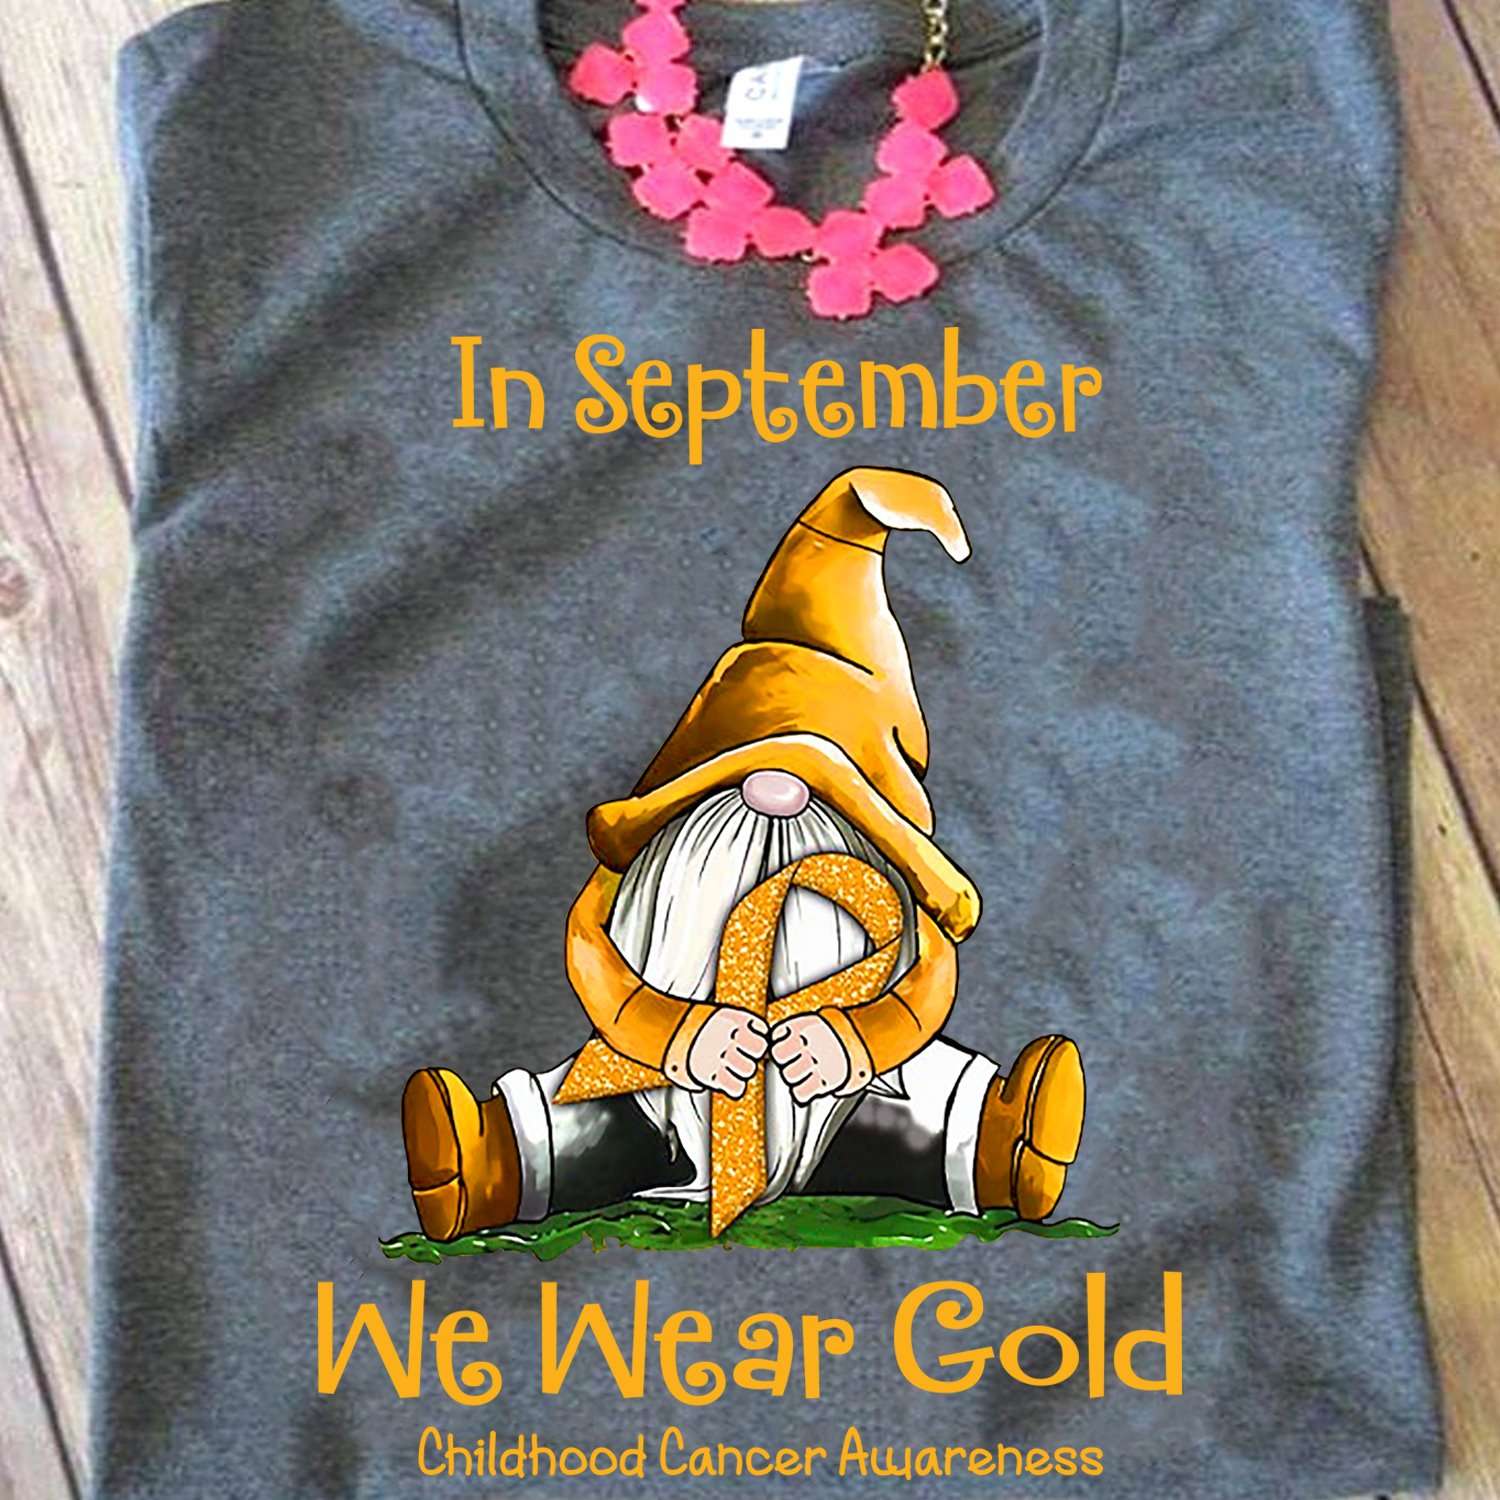 In september we wear gold - Childhood cancer awareness, garden gnome